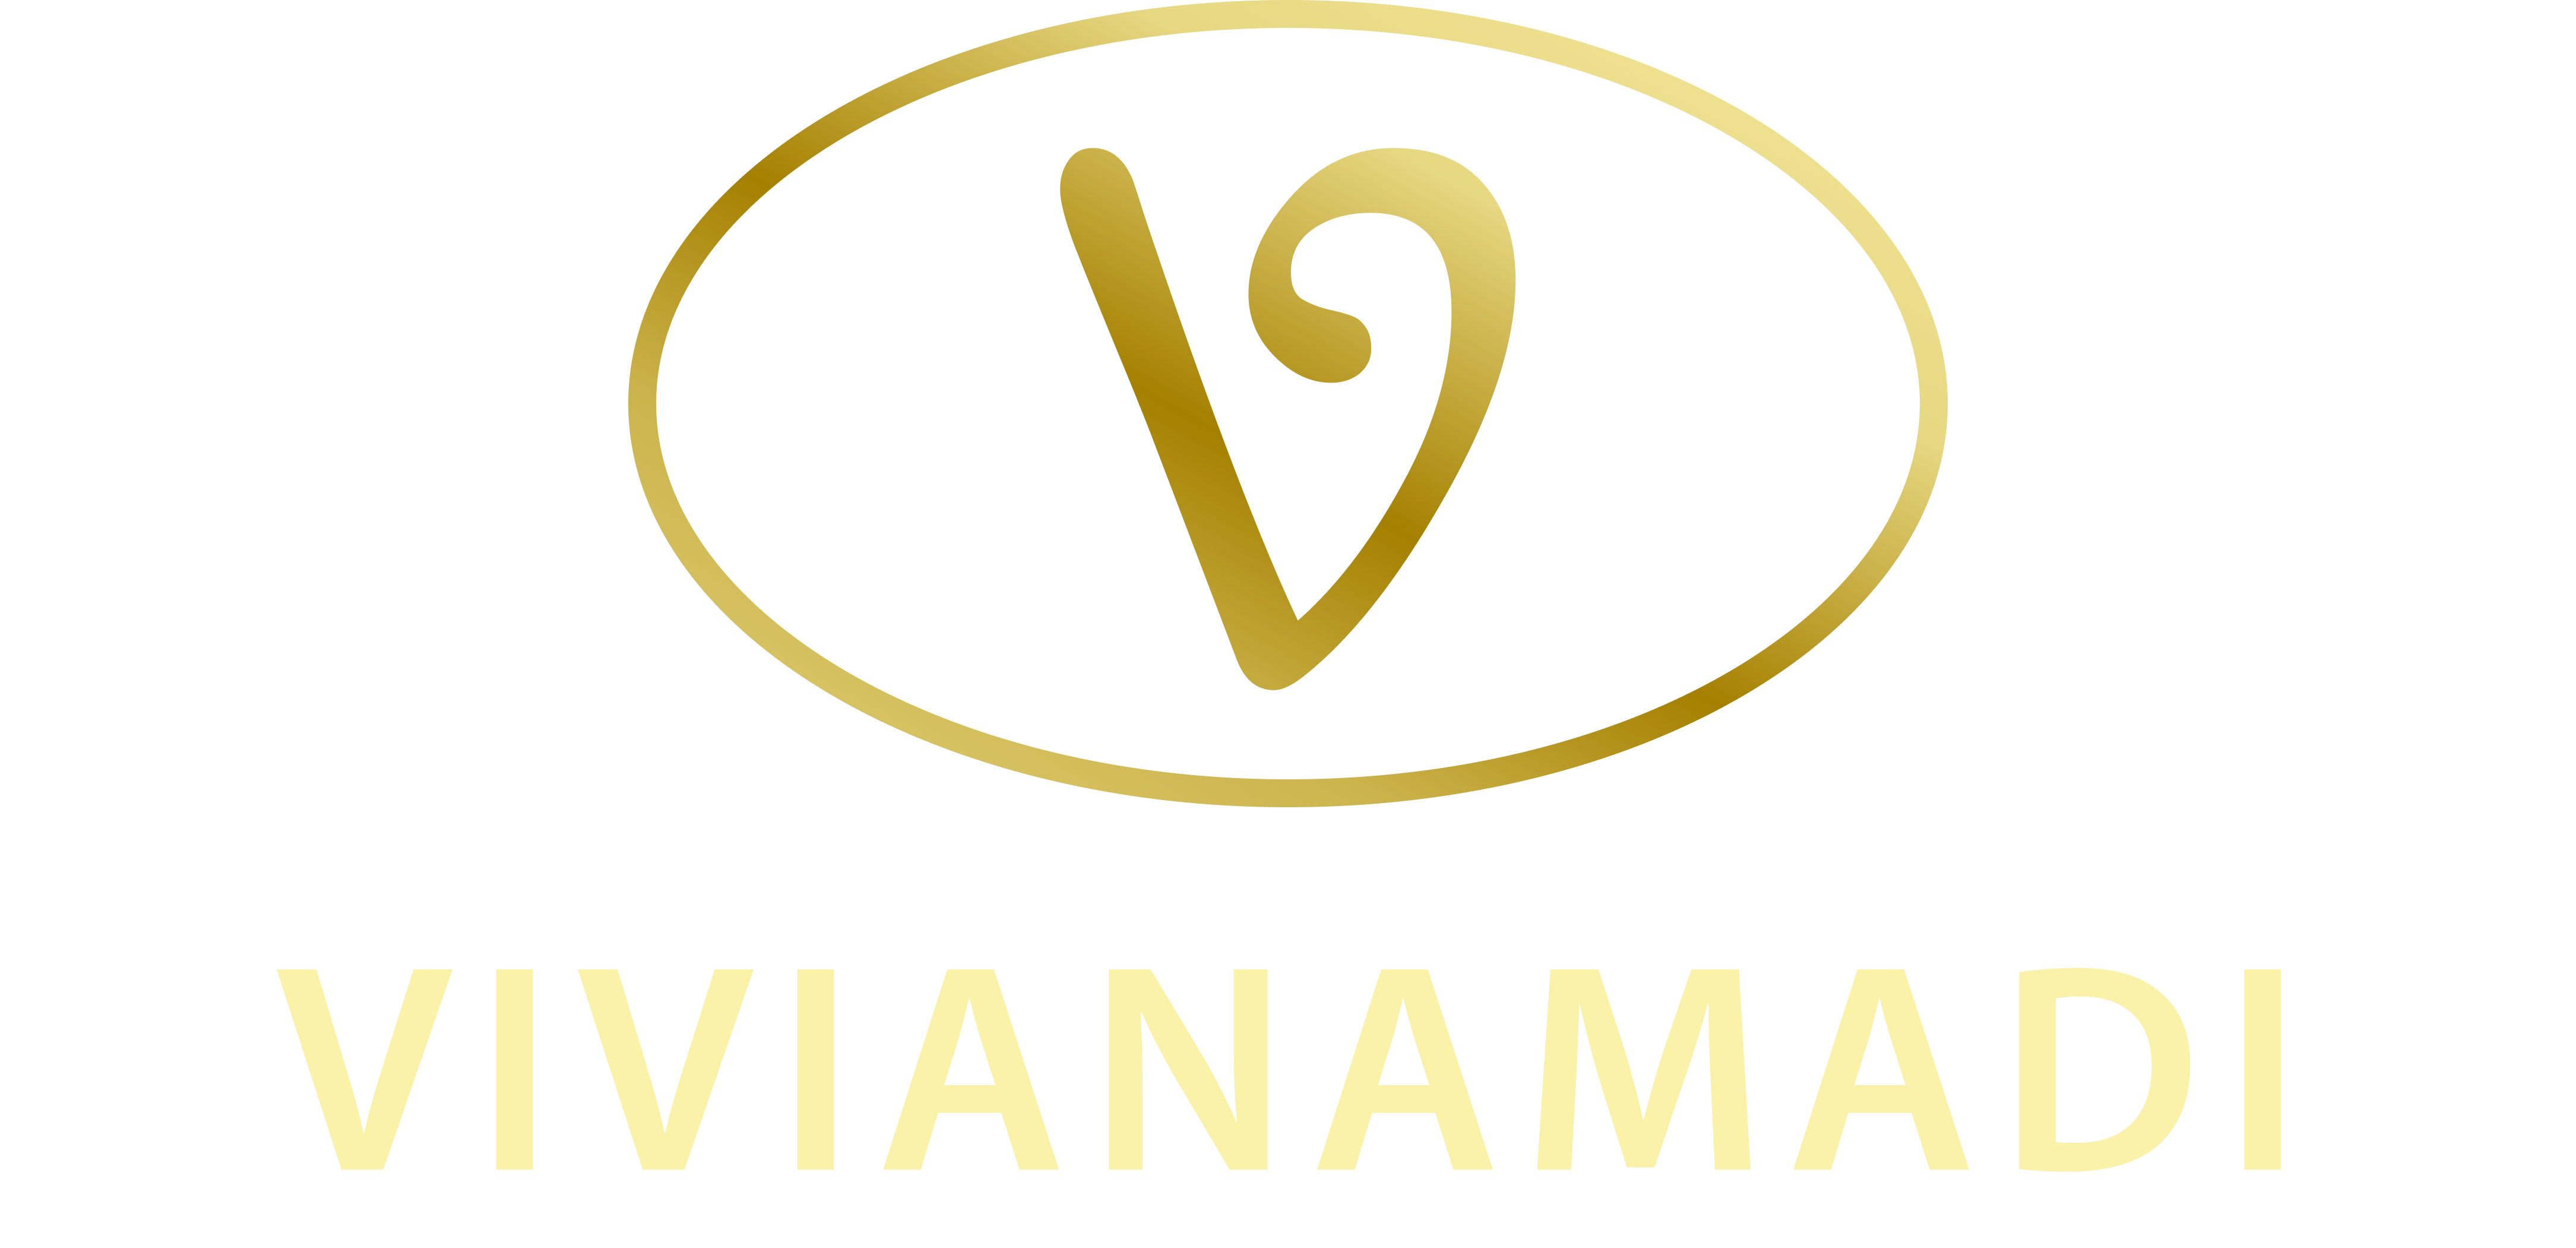 Vivianamadi